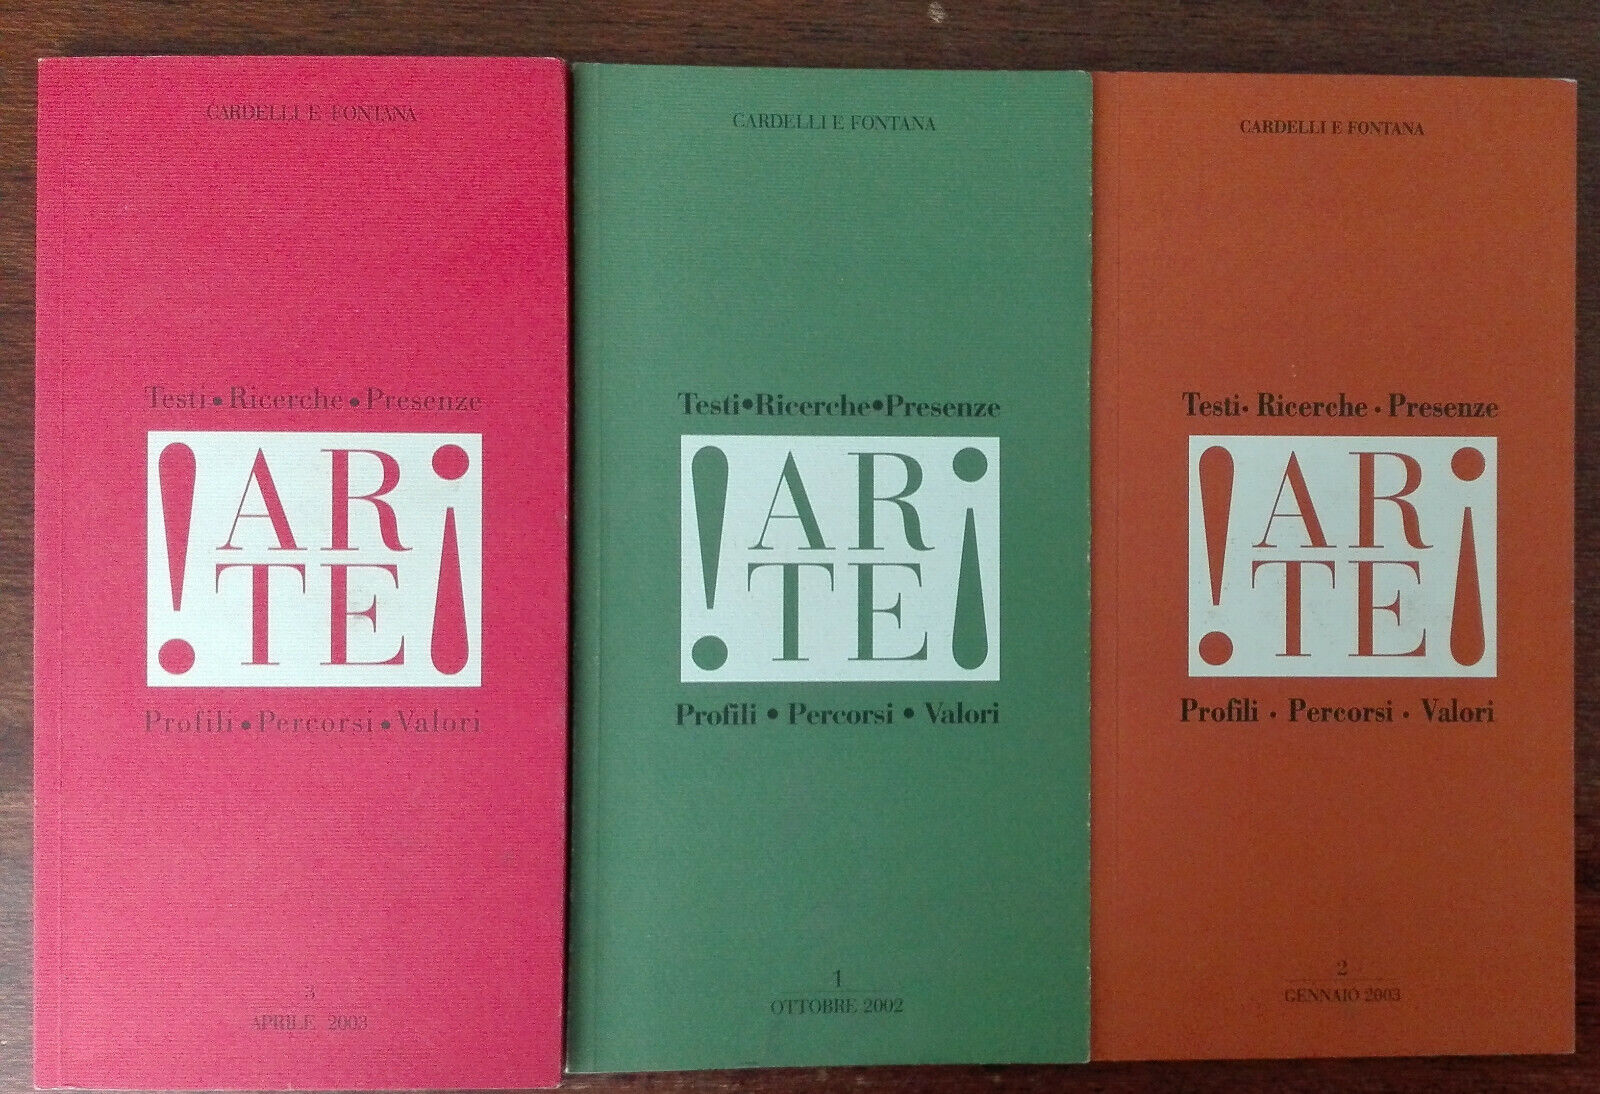 Arte 1,2,3 - Cardelli e Fontana - Redazione Cardelli e Fontana,2002/2003 - A